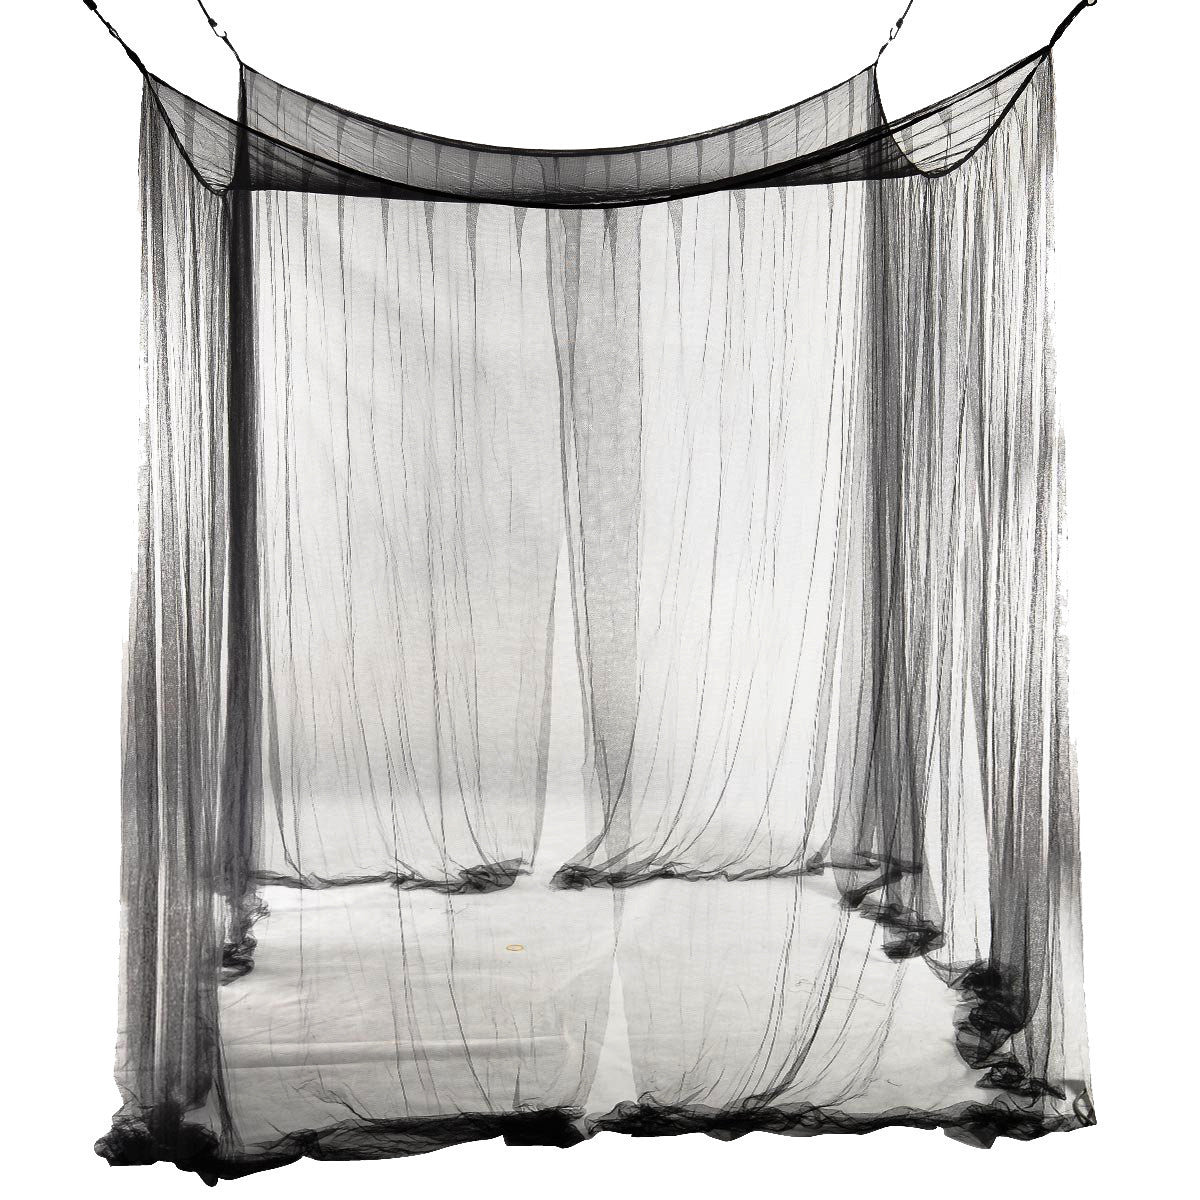 Online discount shop Australia - Boutique 4-Corner Bed Netting Canopy Mosquito Net for Queen